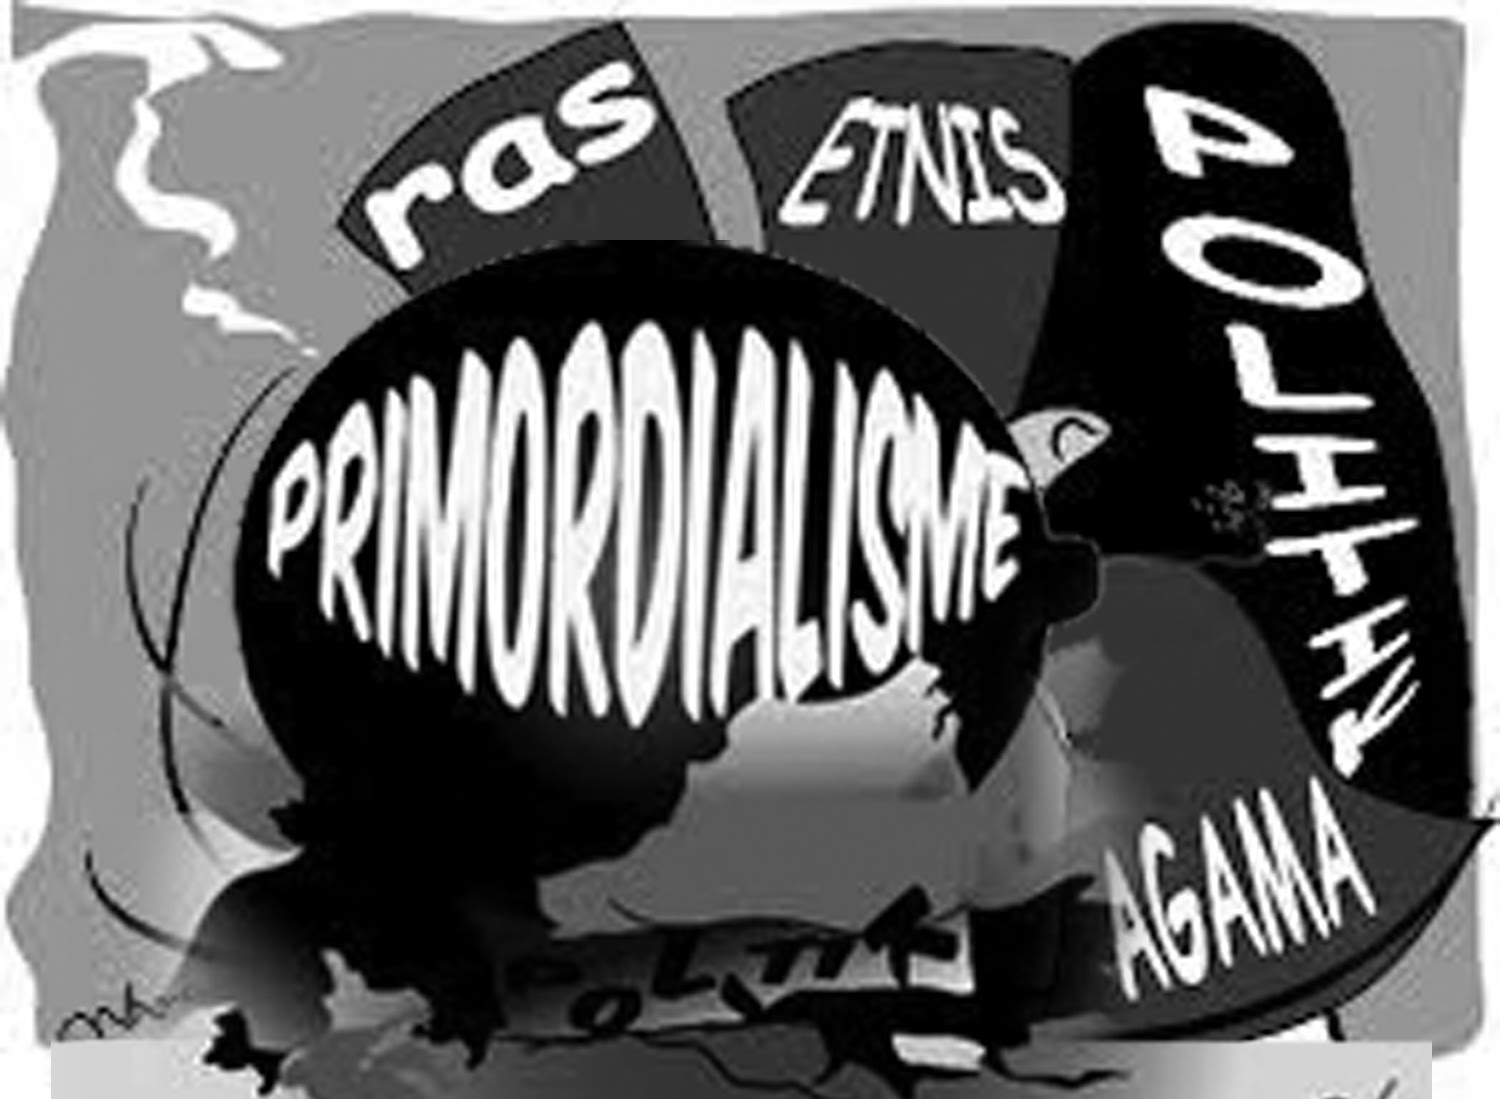 Apa itu primordialisme